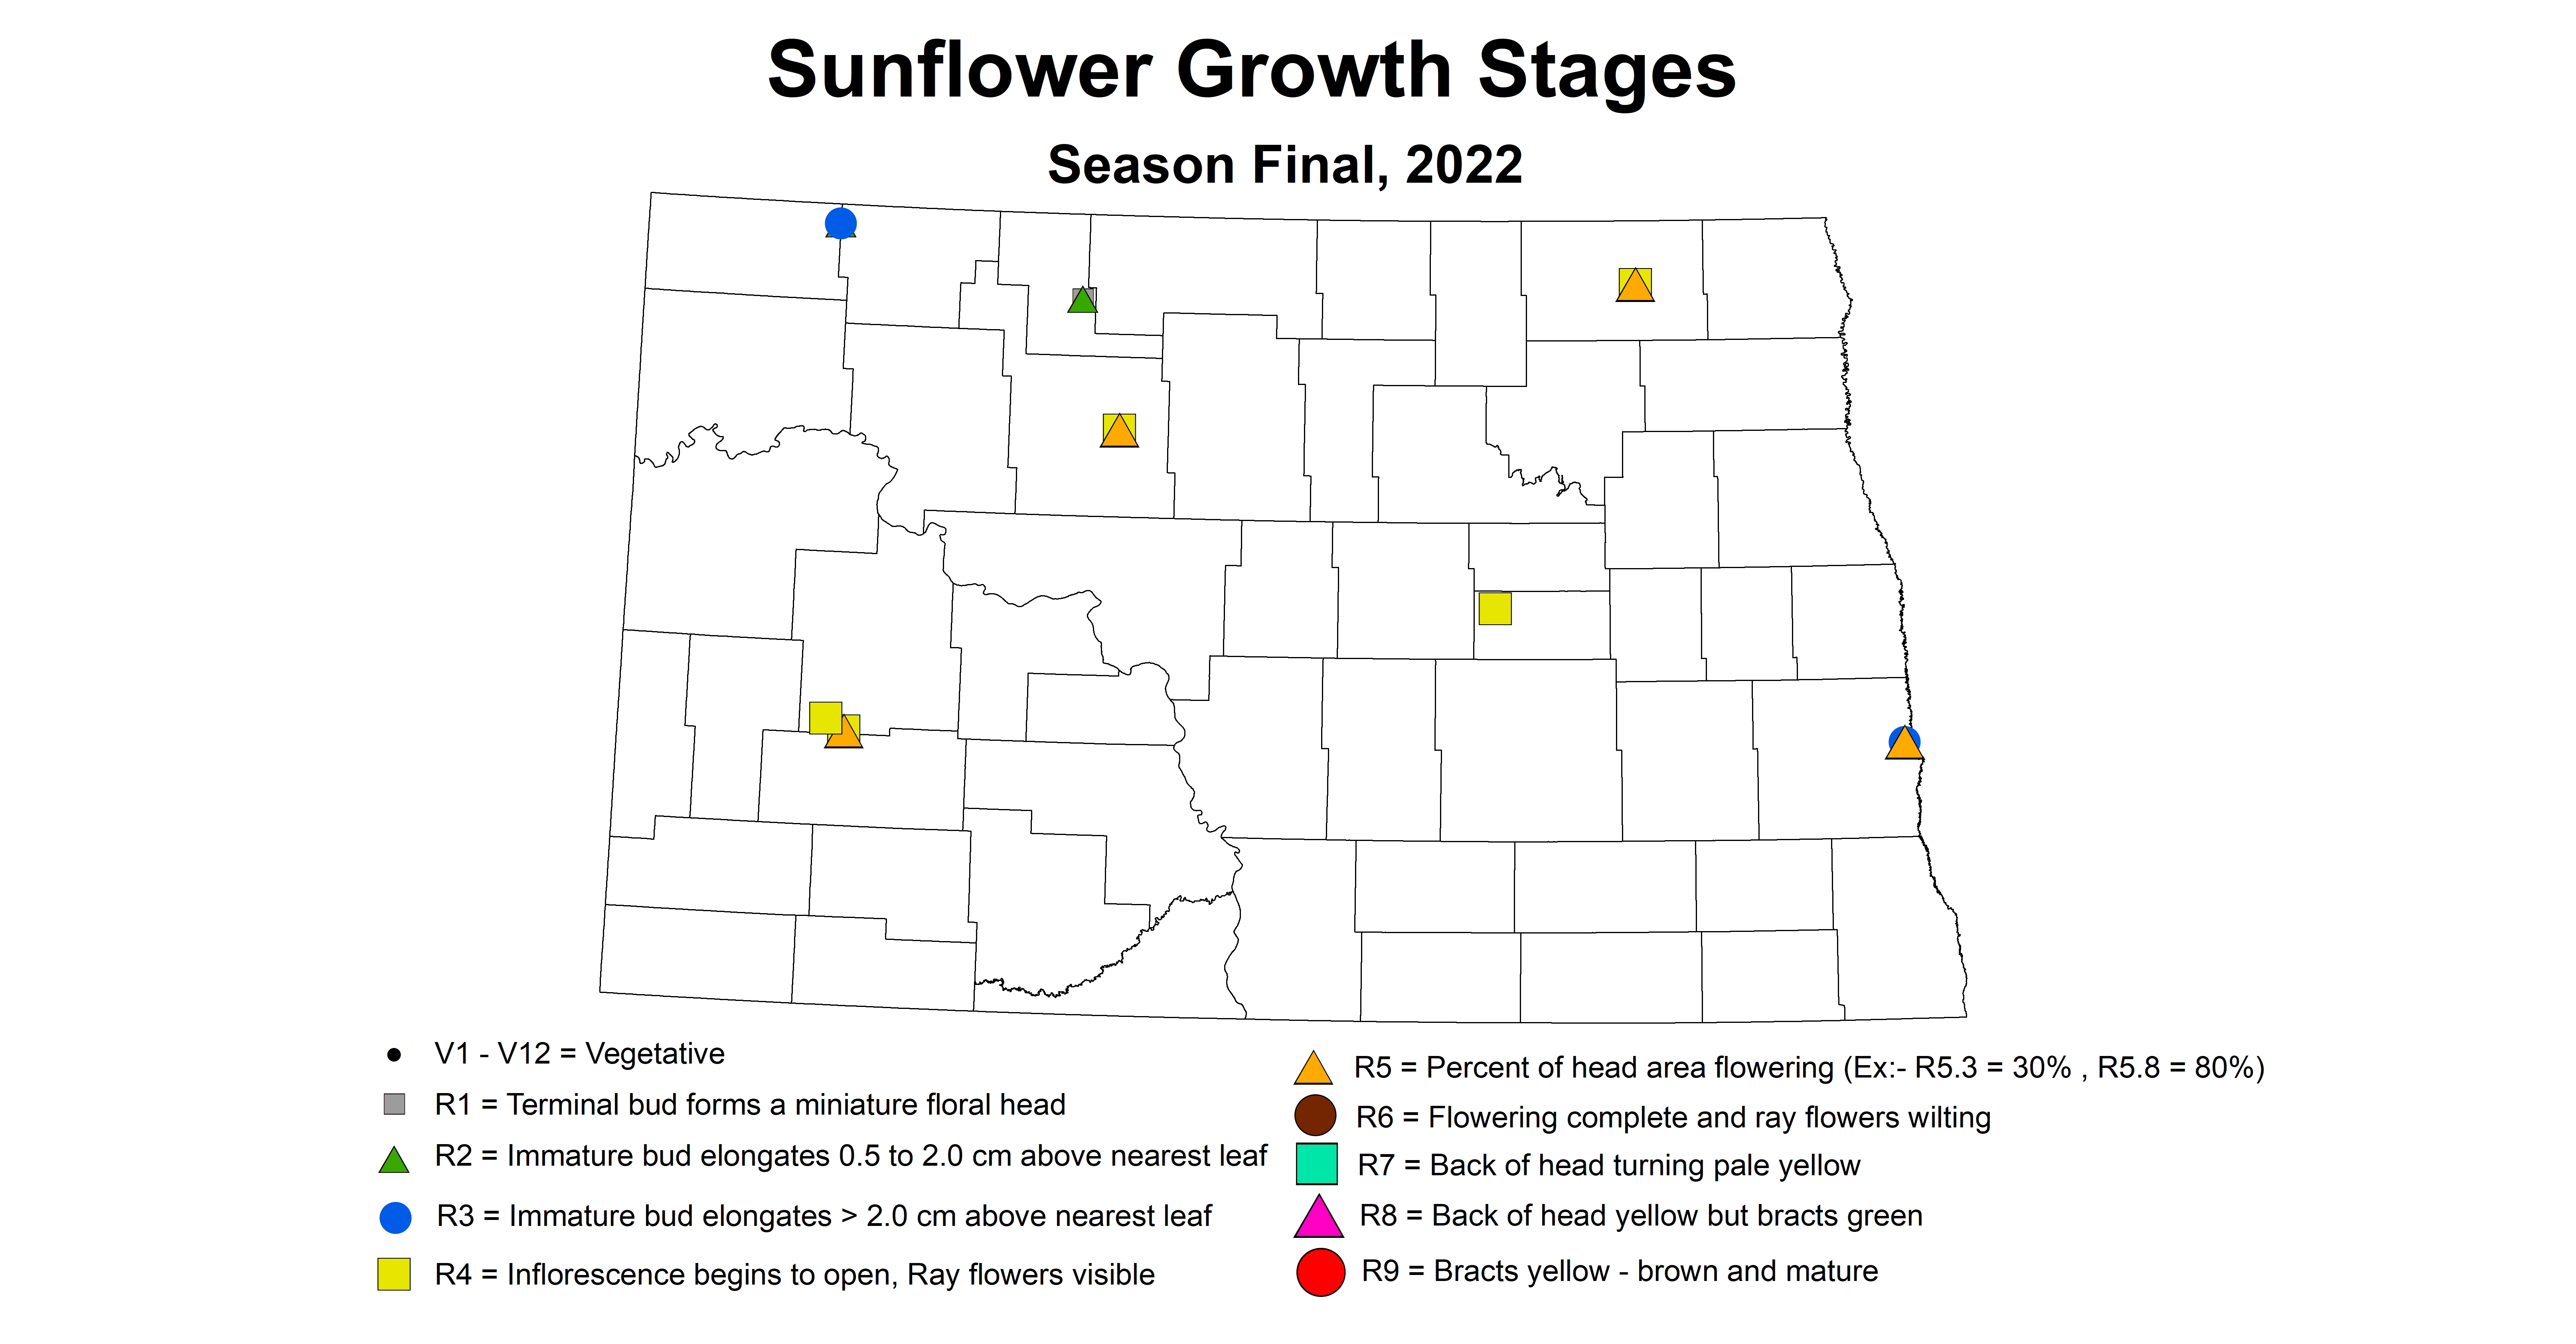 sunflower growth stage 2022 season final